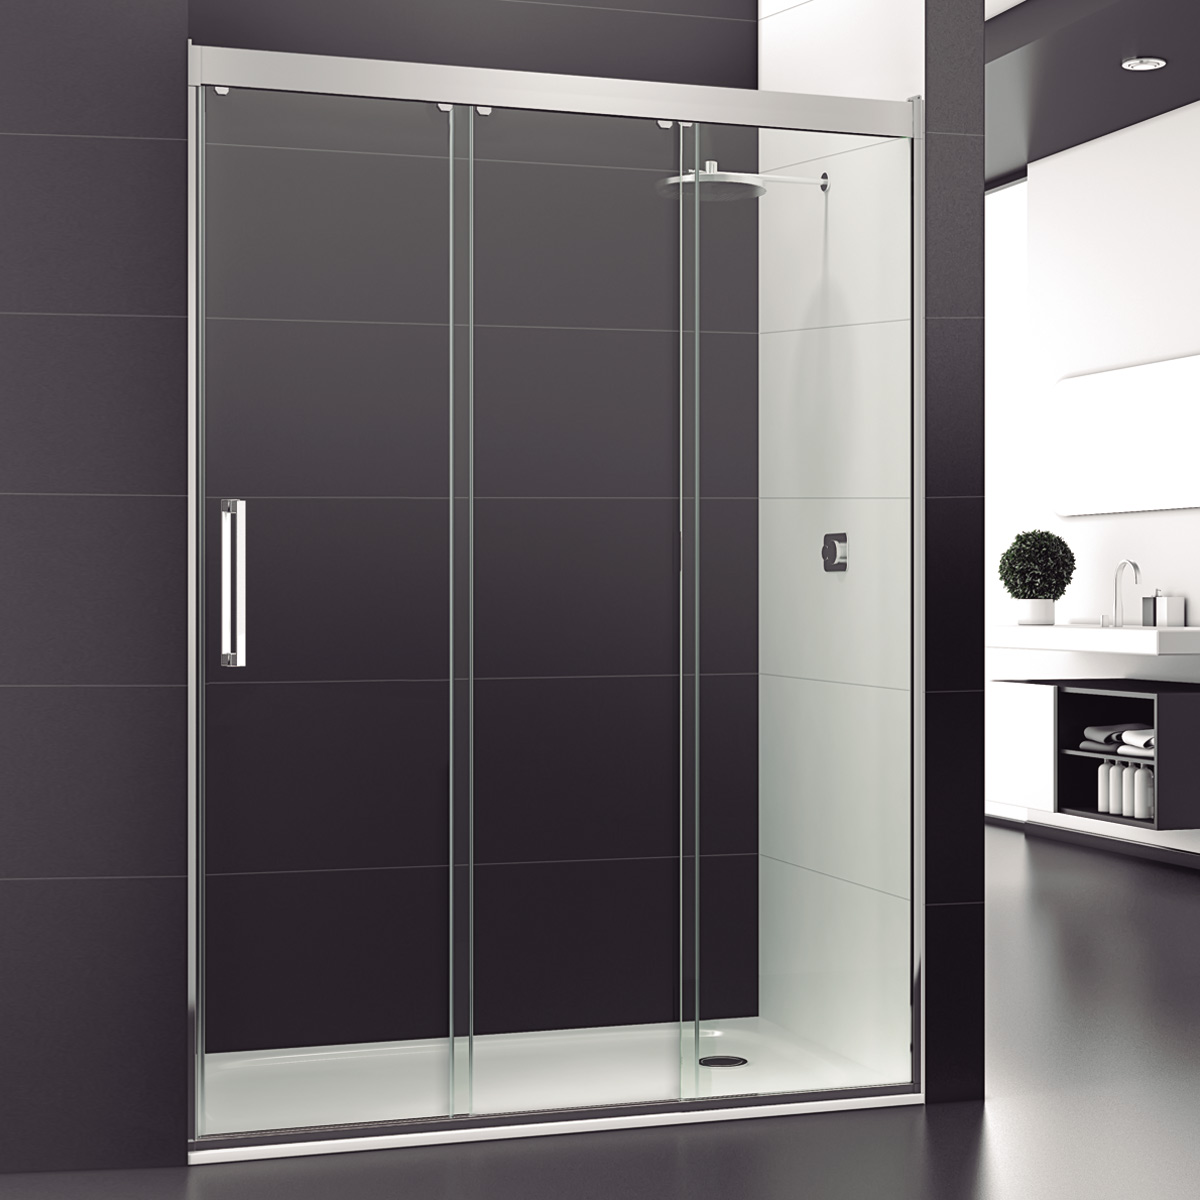 3 puertas de ducha - Ideal Mamparas